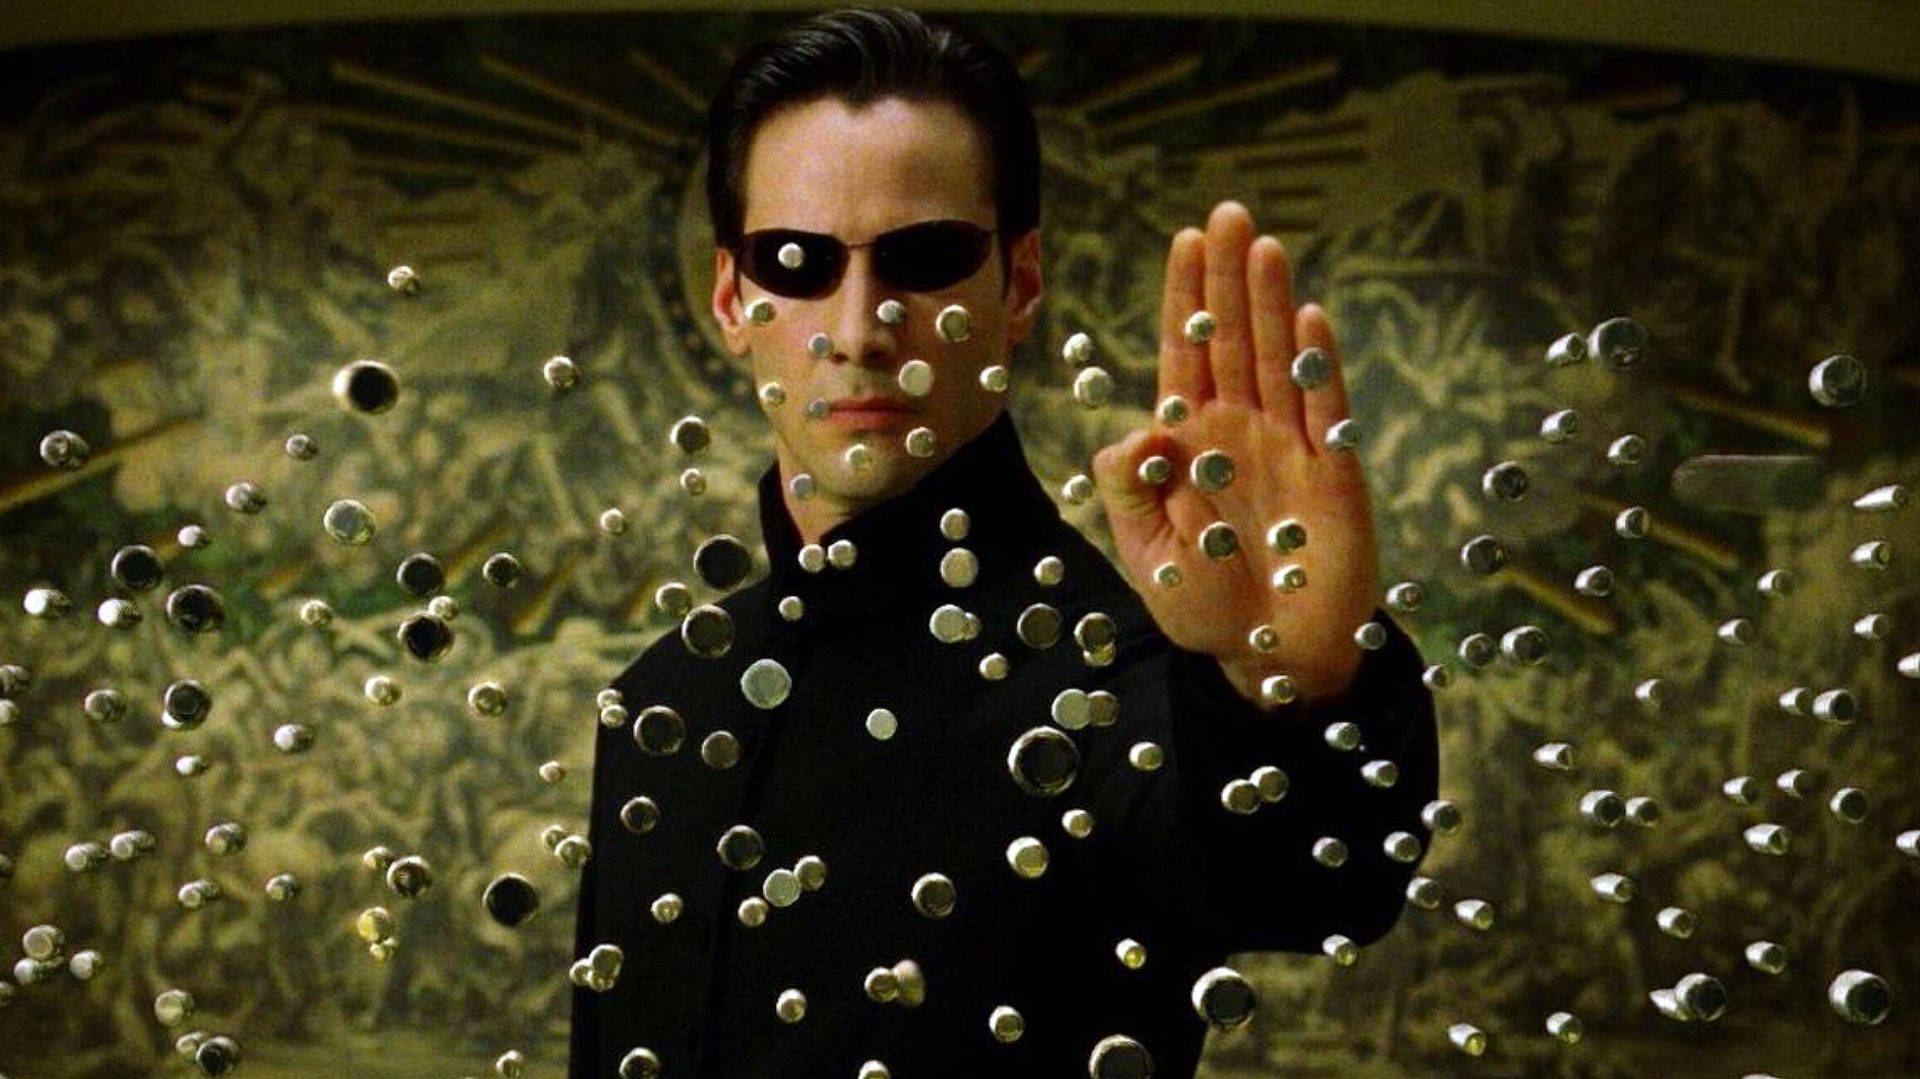 final alternativo de Matrix, By Souzones